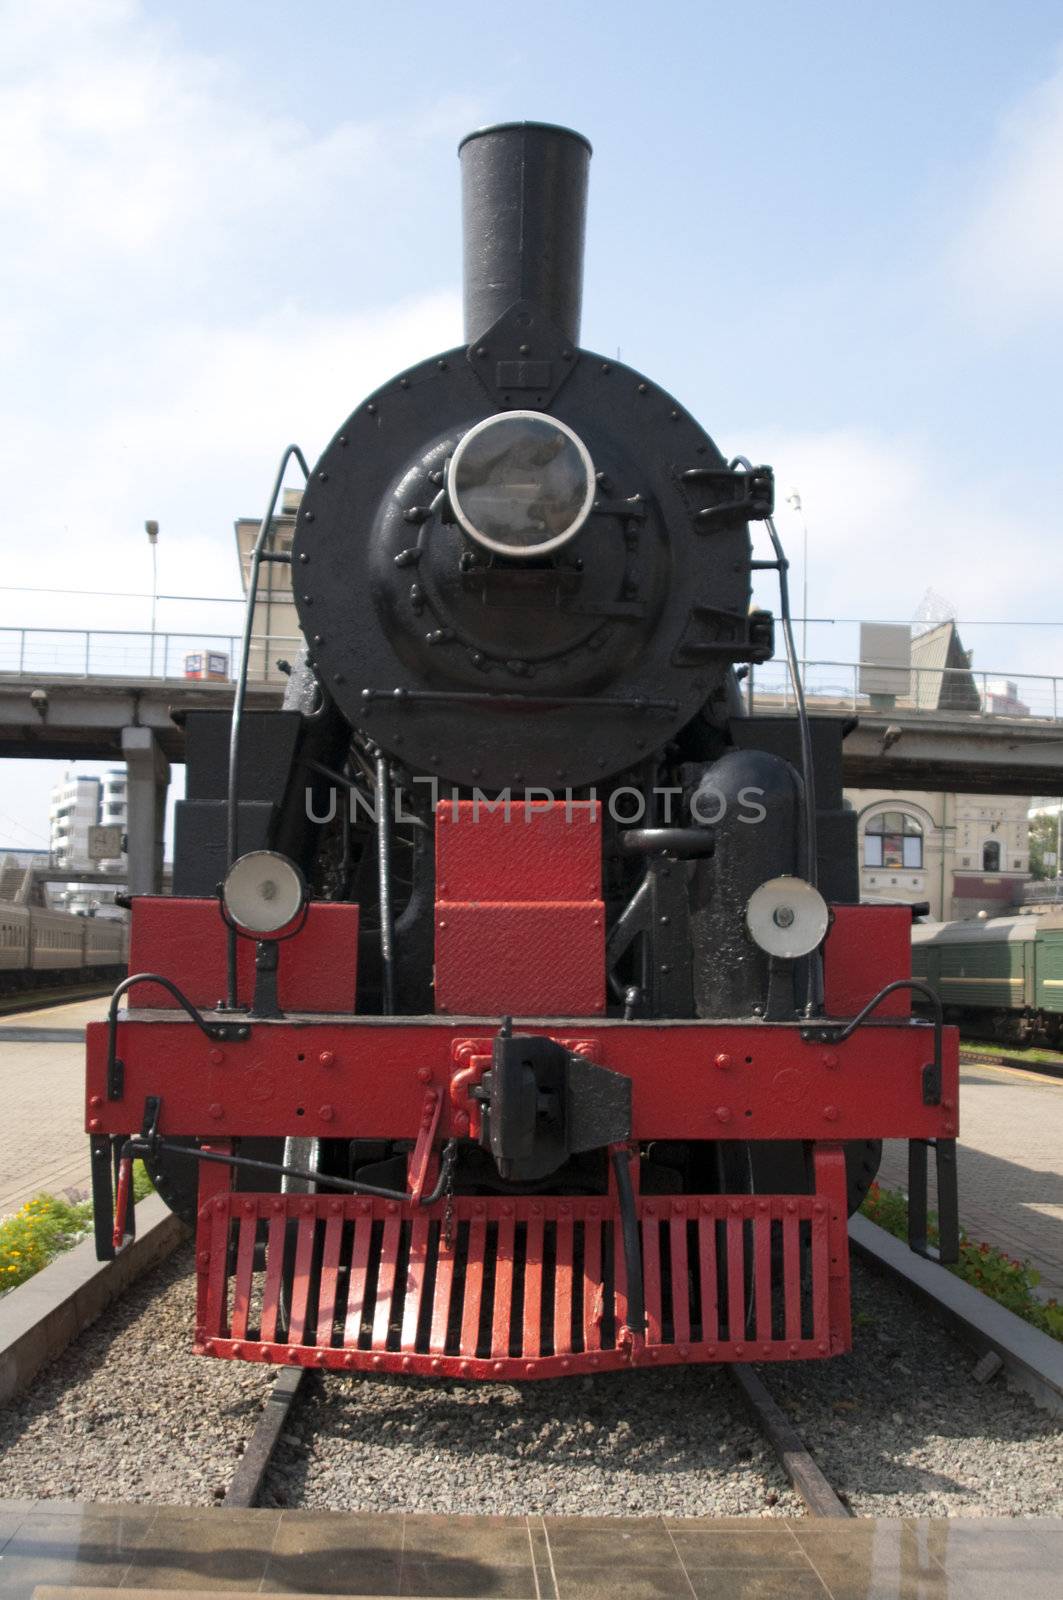 High resolution image. Vintage steam locomotive. Ancient train with a steam locomotive.